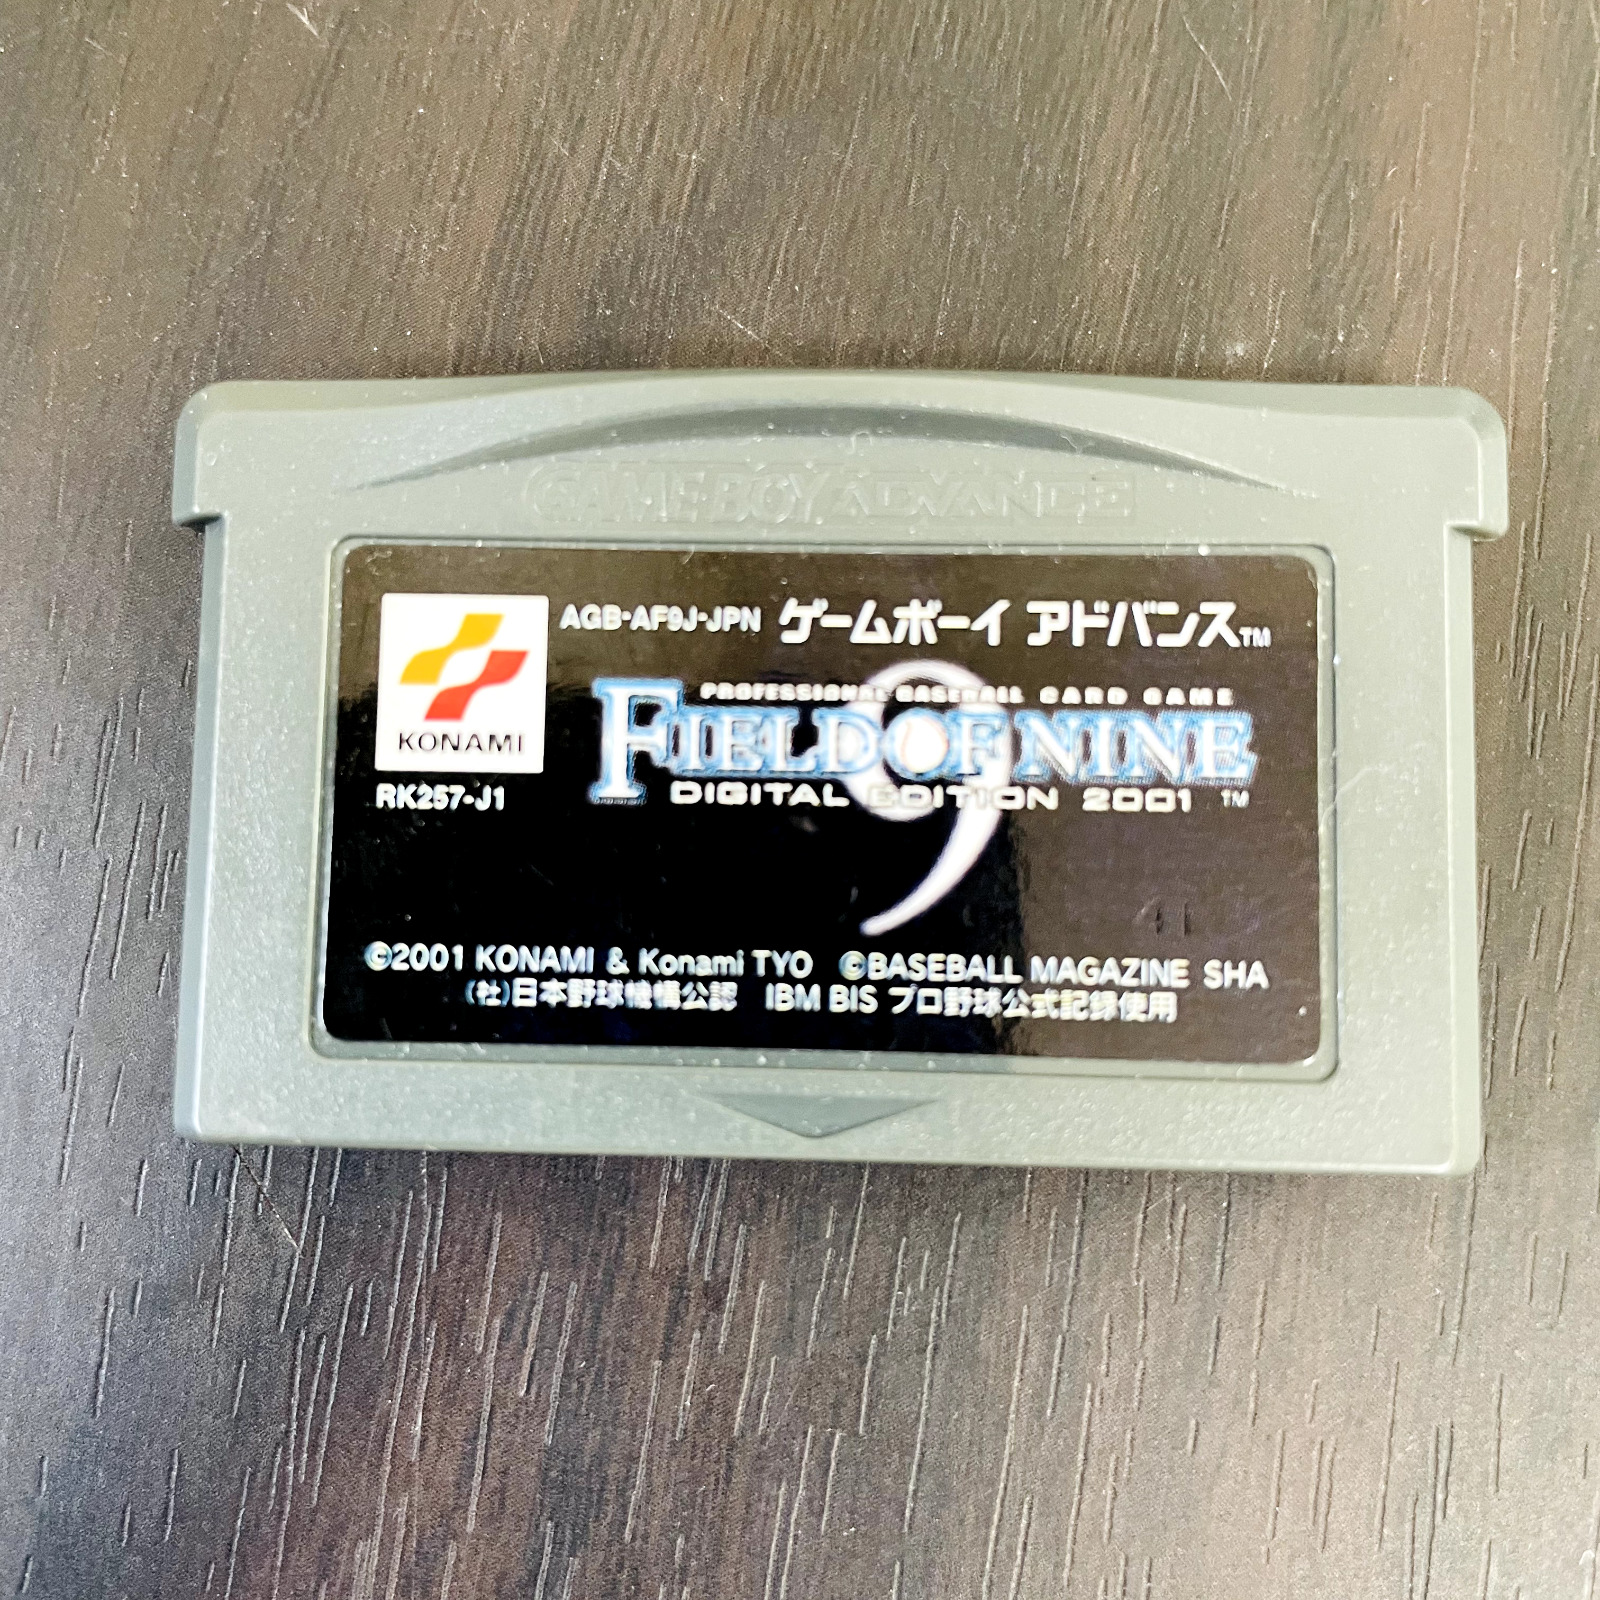 Field Of Nine Digital Edition Nintendo Game Boy Advance 2001 Japanese Version